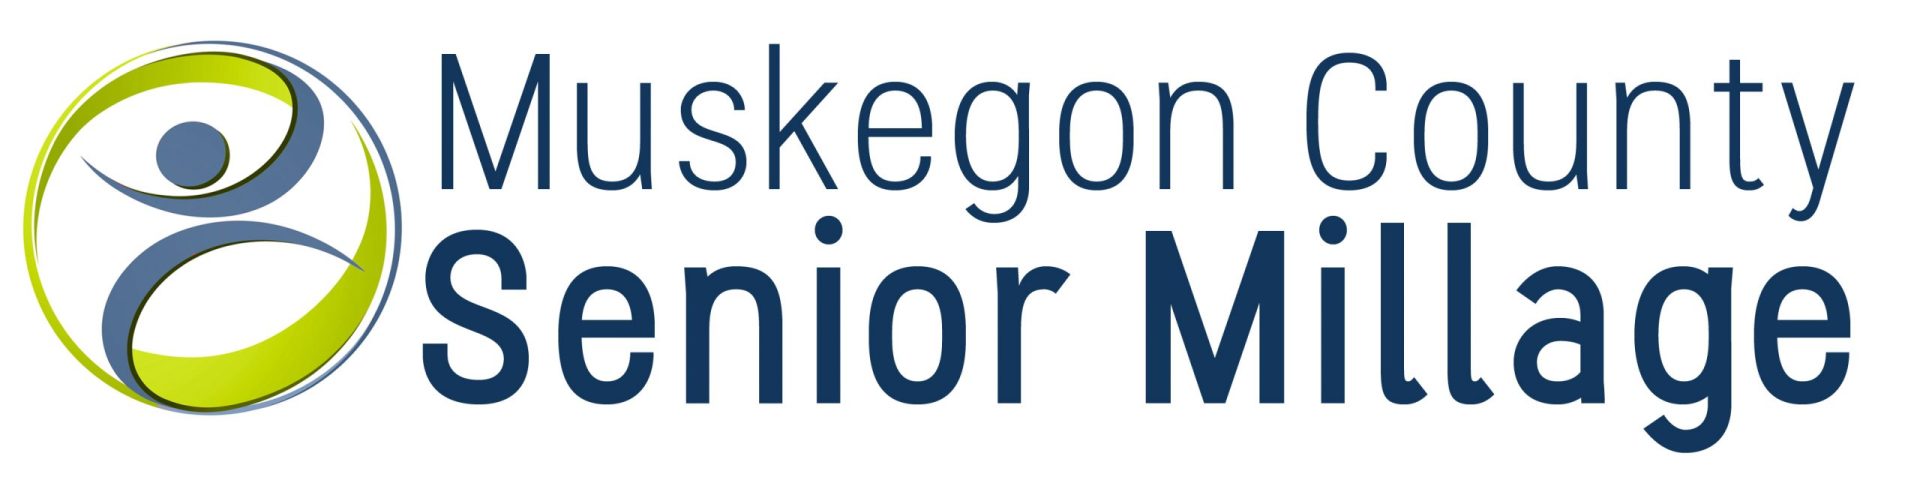 Muskegon County Senior Millage logo